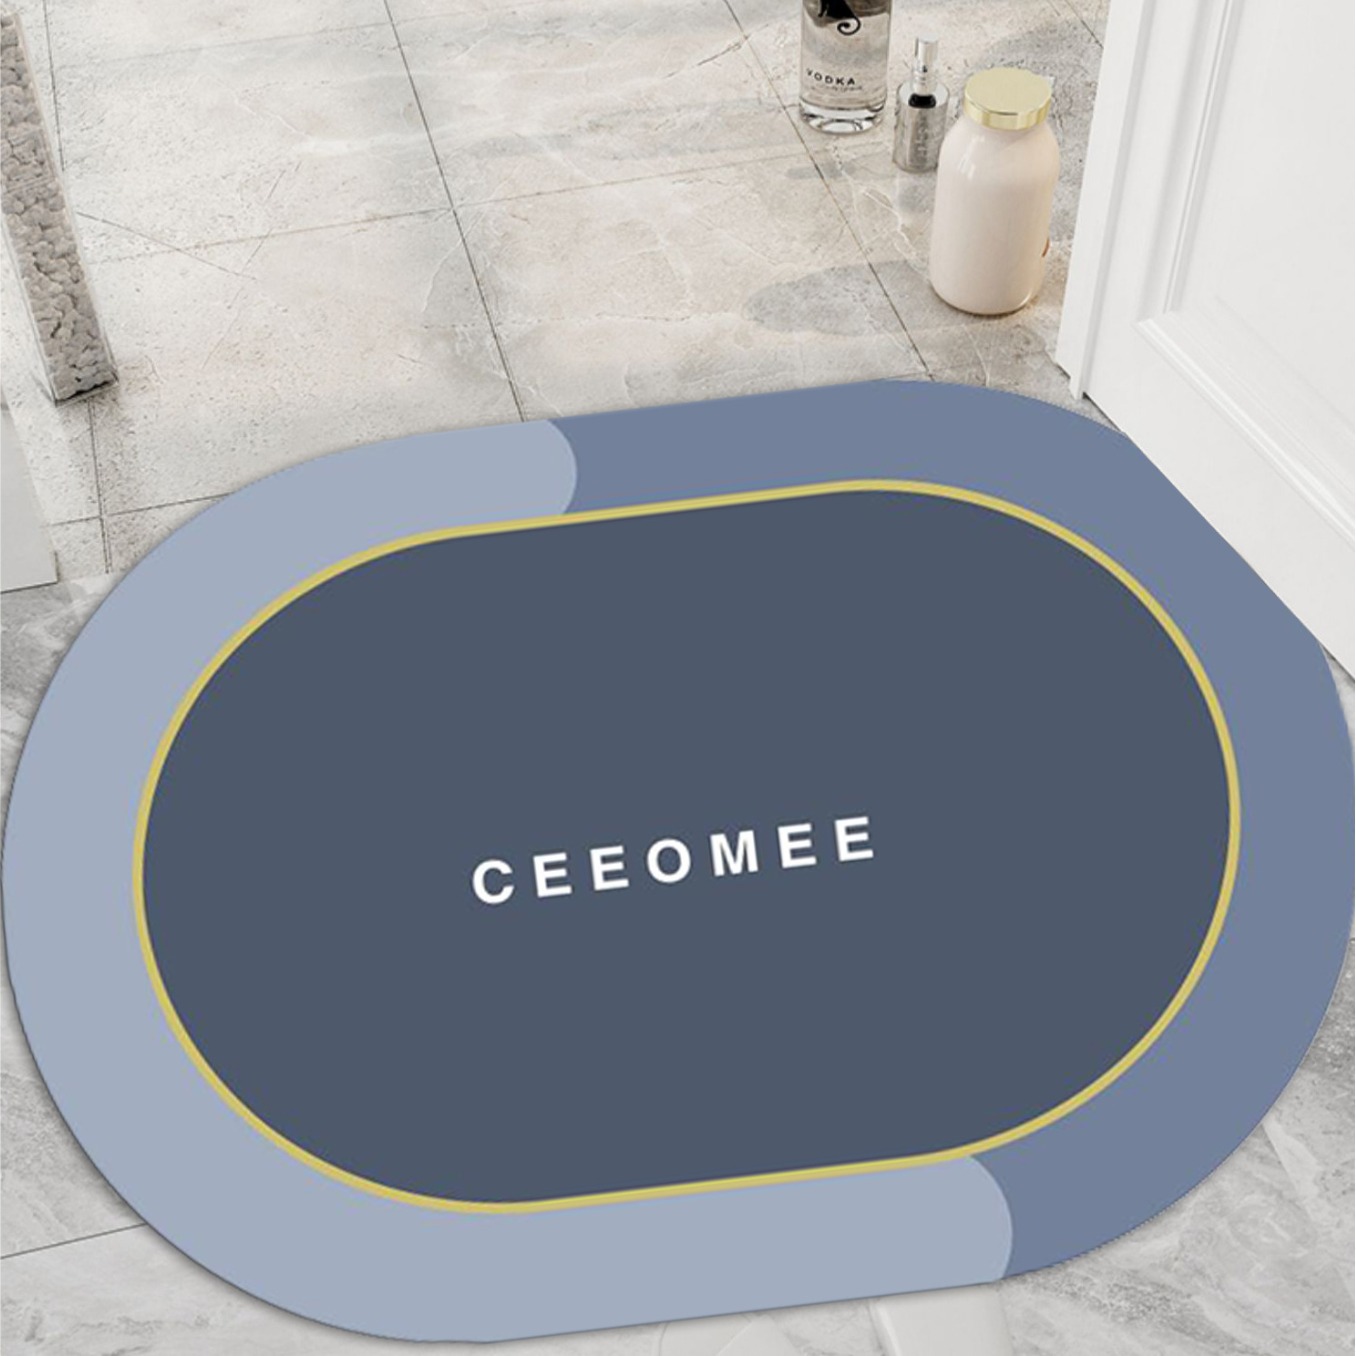 Cross-Border Imitation Diatom Ooze Bathroom Absorbent Carpet Bathroom Entrance Floor Mat Non-Slip Toilet Diatom Ooze Floor Mat